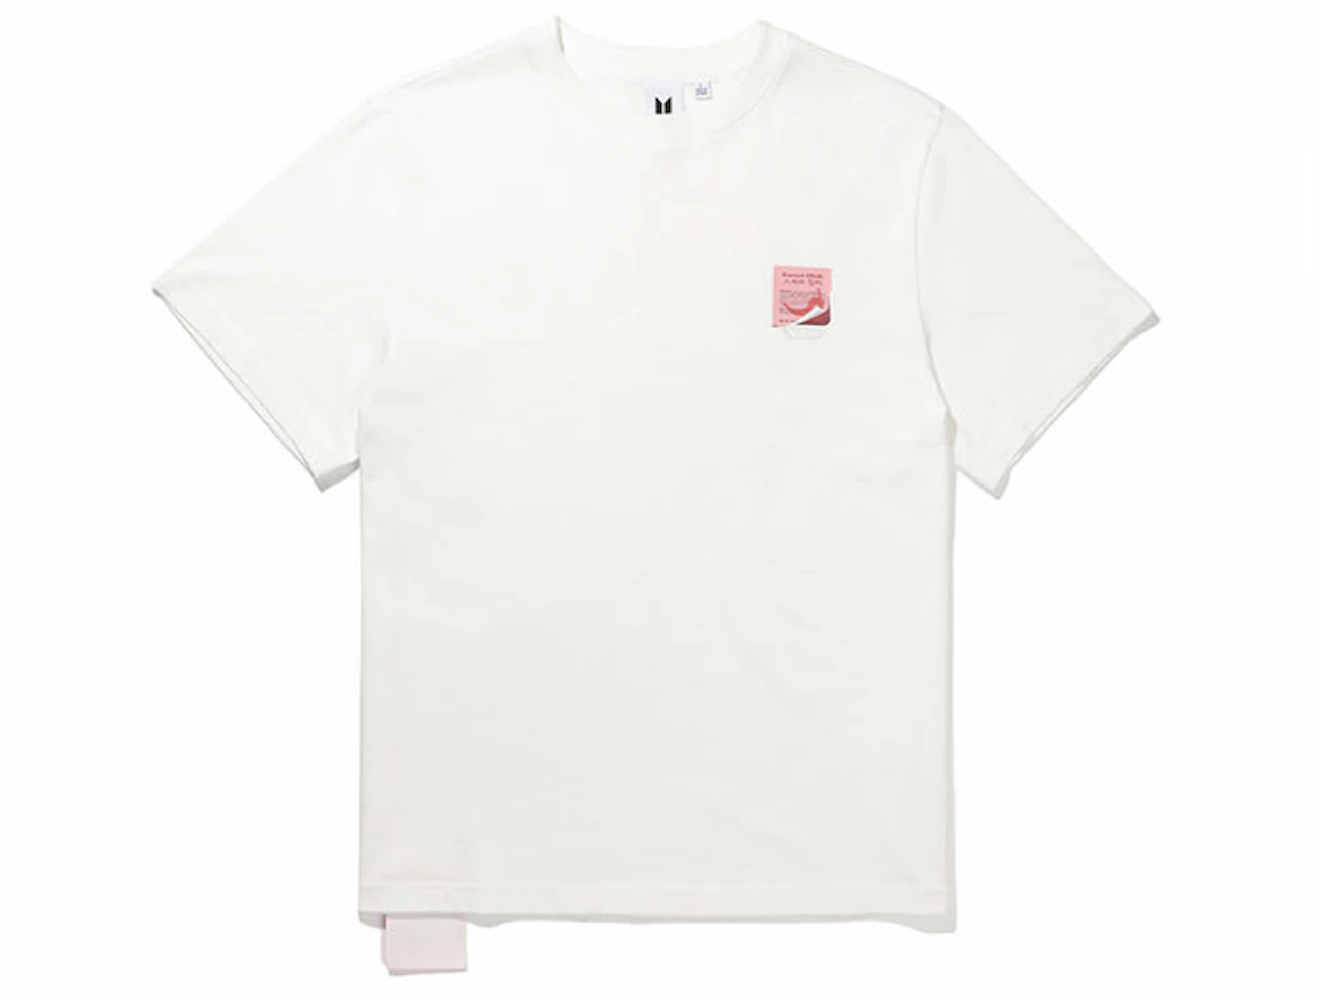 BTS x Mcdonald's SWTCHILI T-shirt White - SS21 - US